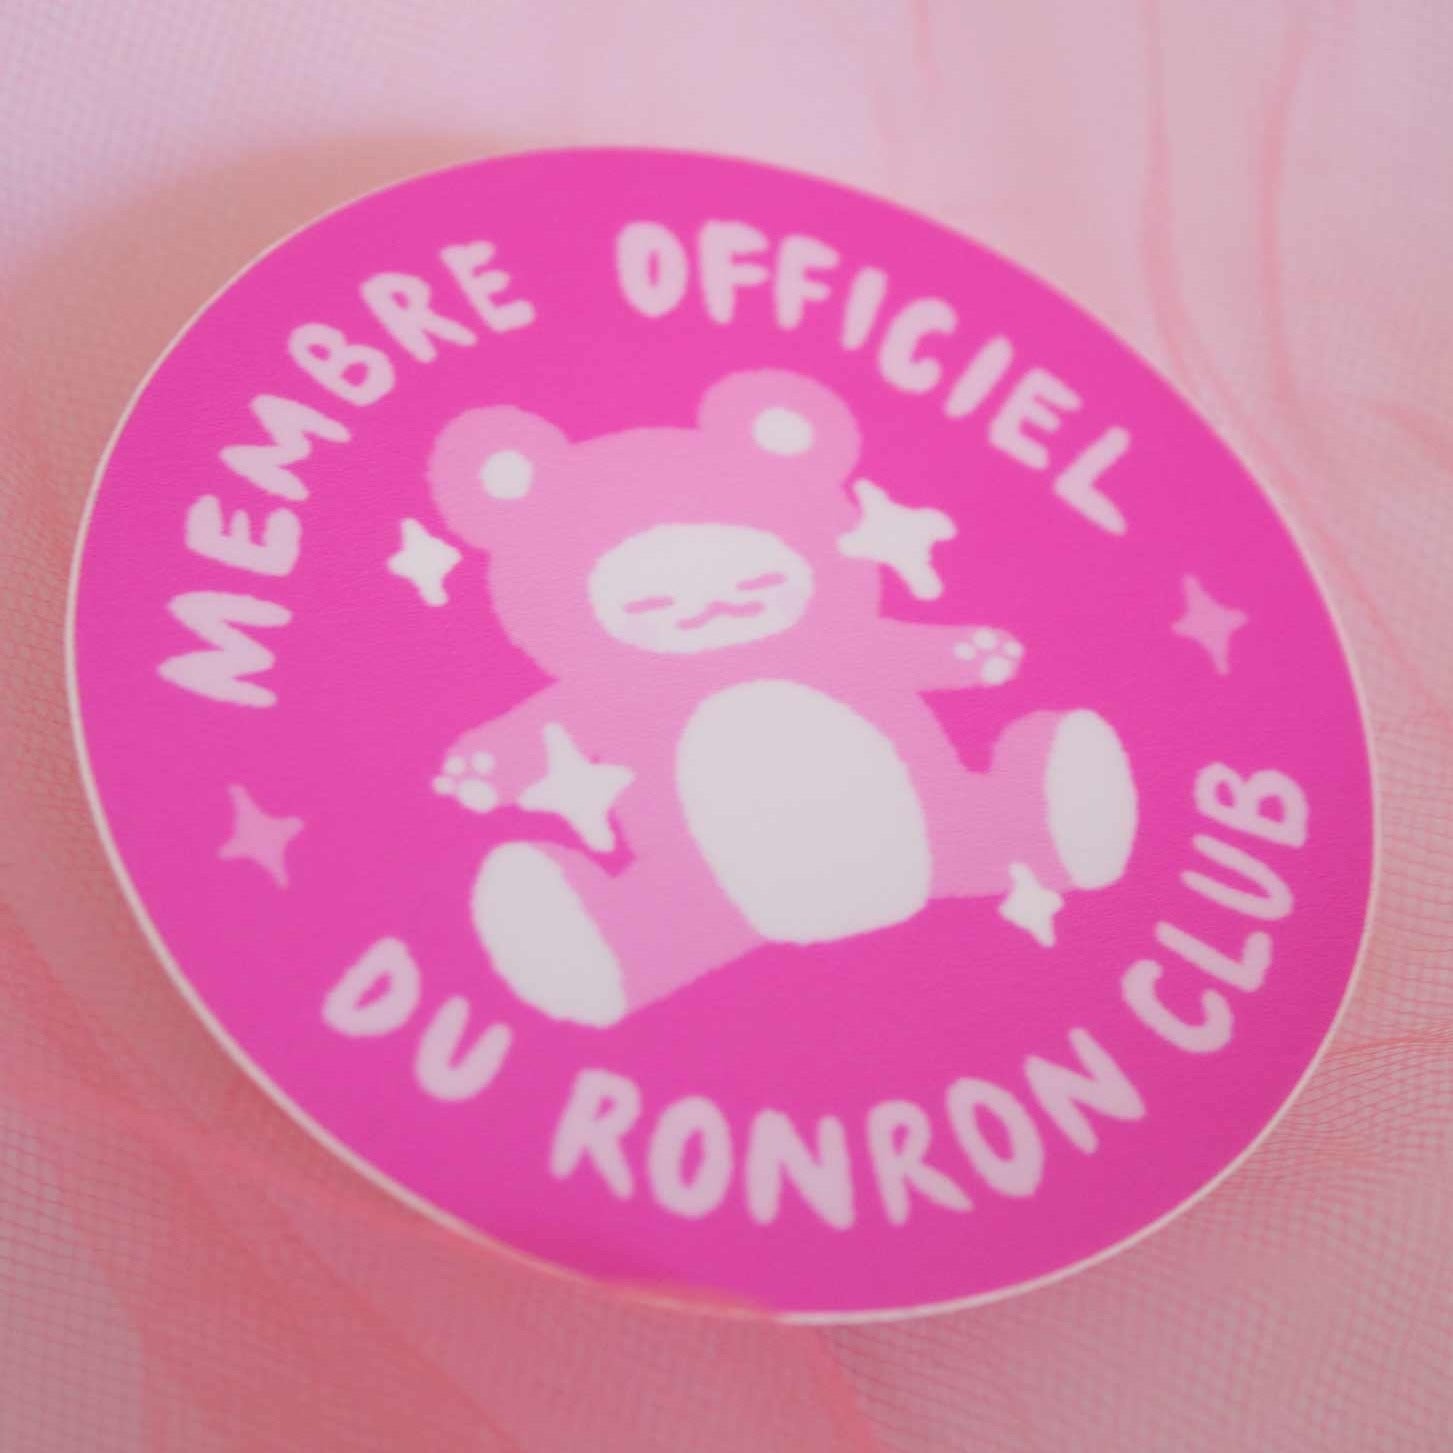 Official Ronron club member sticker 3"